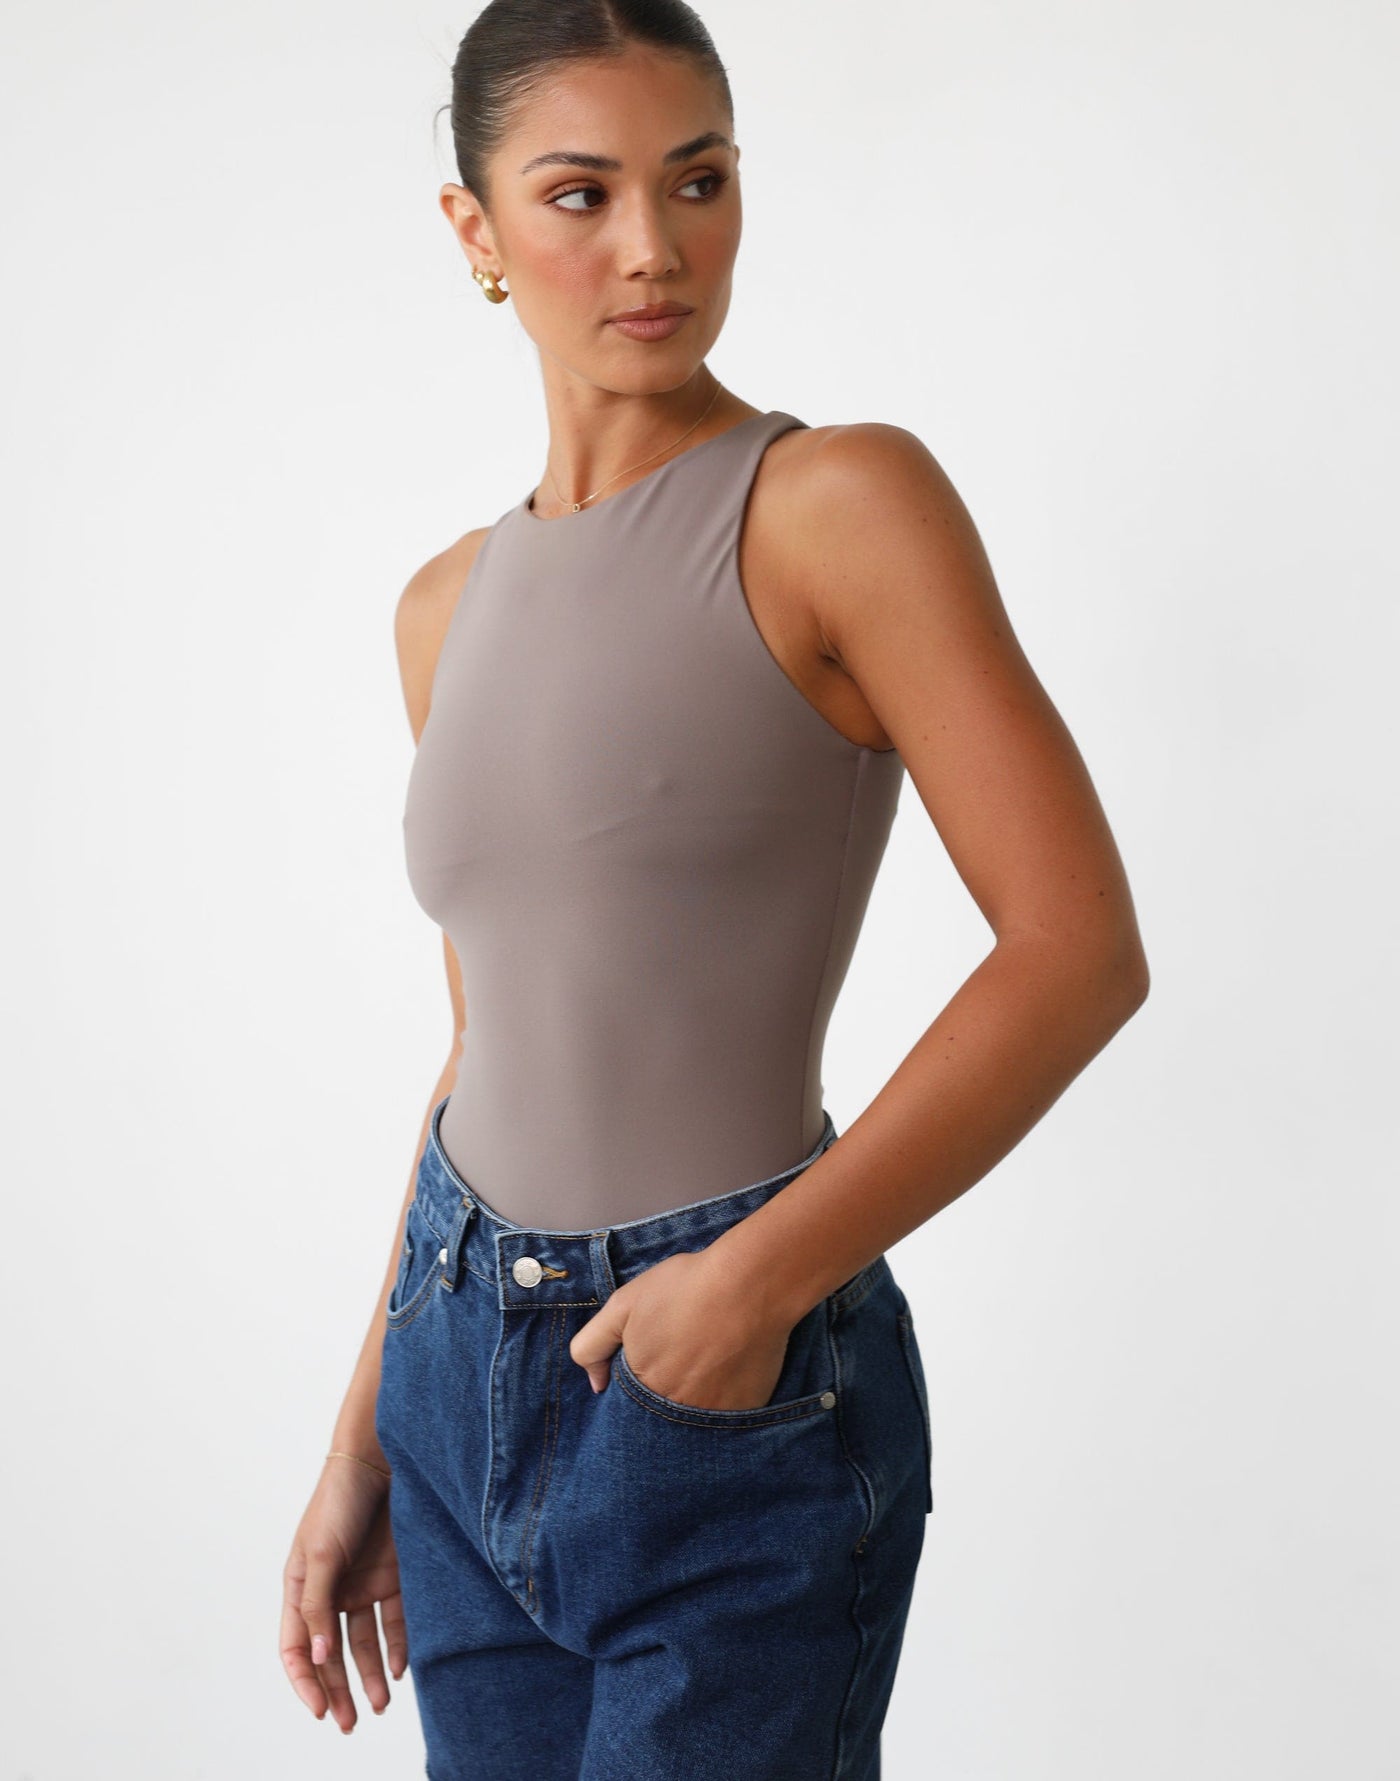 Vivid Bodysuit (Ash) - Double Lined Butter Jersey Bodysuit - Women's Top - Charcoal Clothing